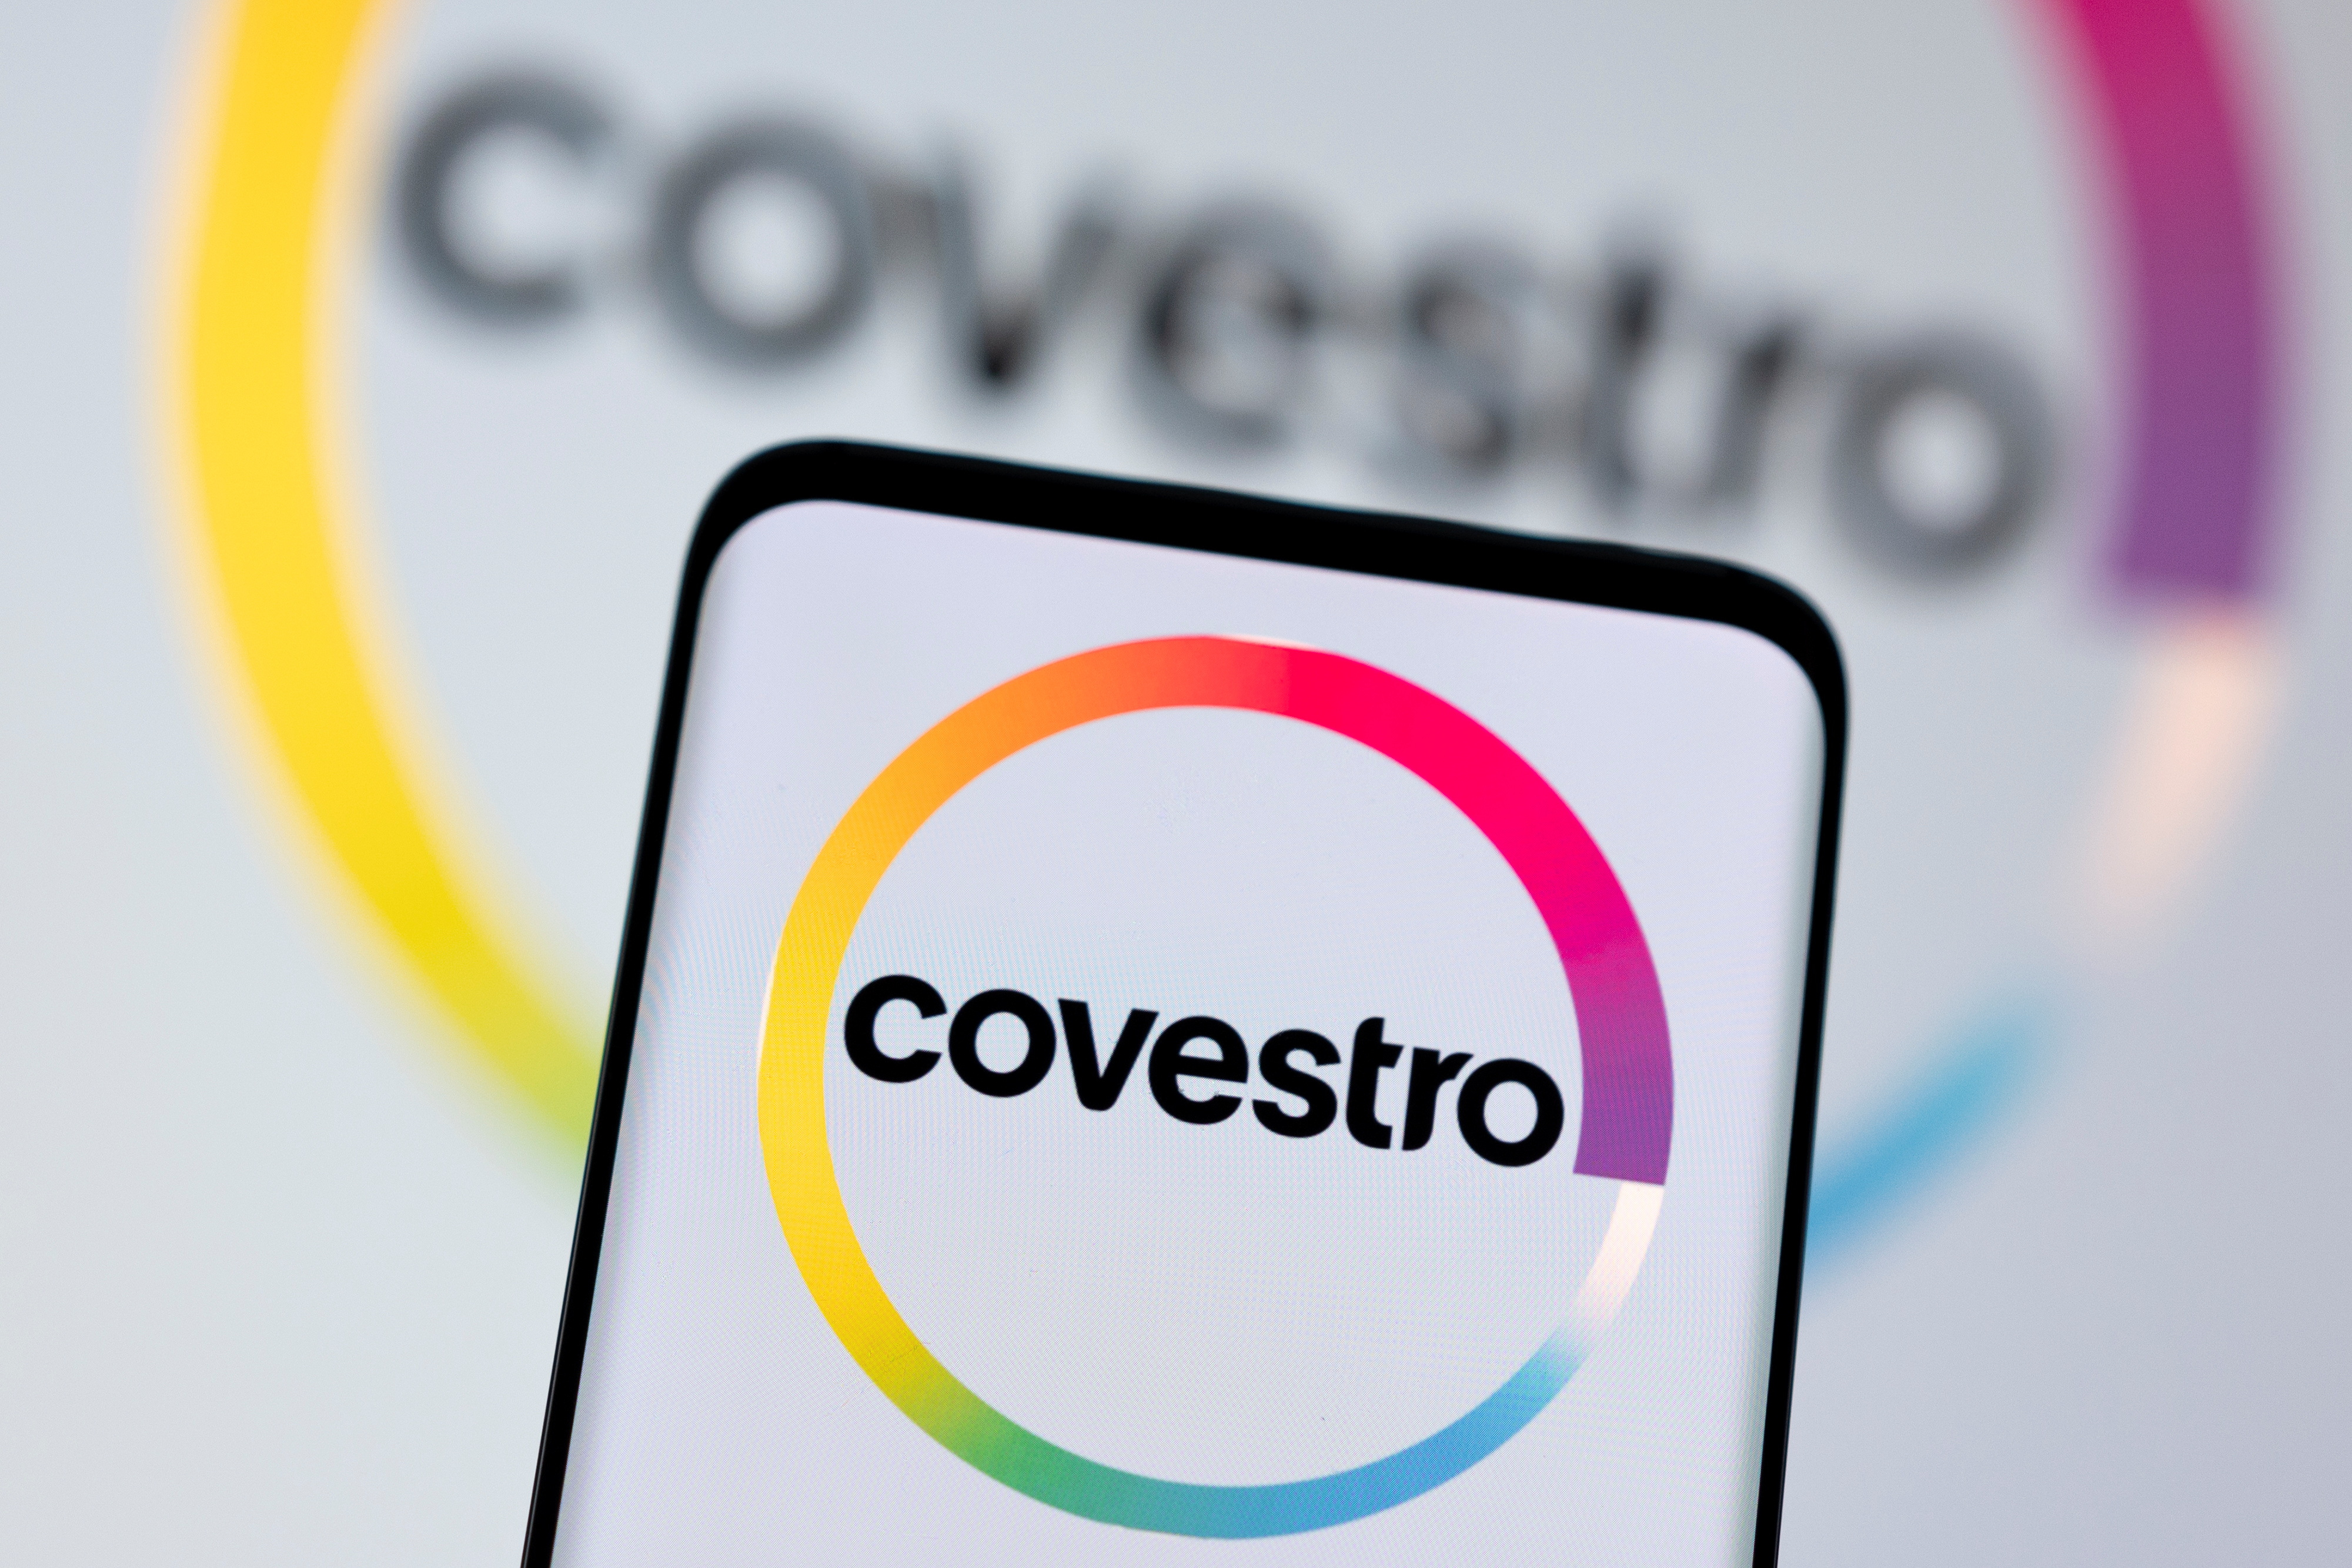 Illustration shows Covestro logo